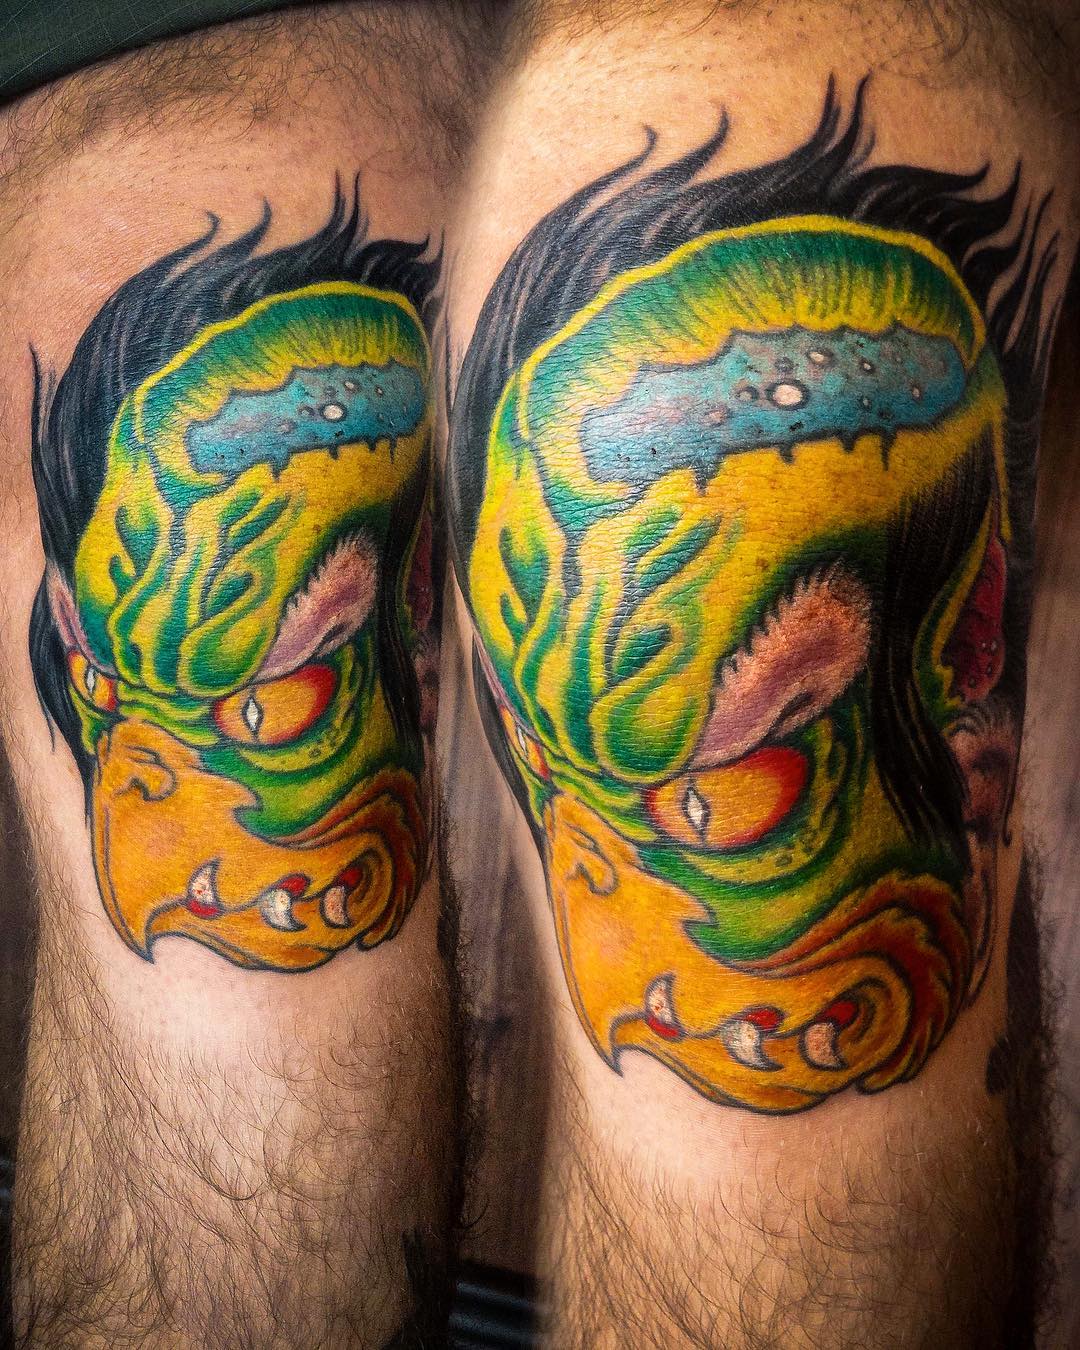 Oh my knee!
.
.
.
#tattoo #tattooing #tatovering#tatuagem #tatouage #garuda#kapp...